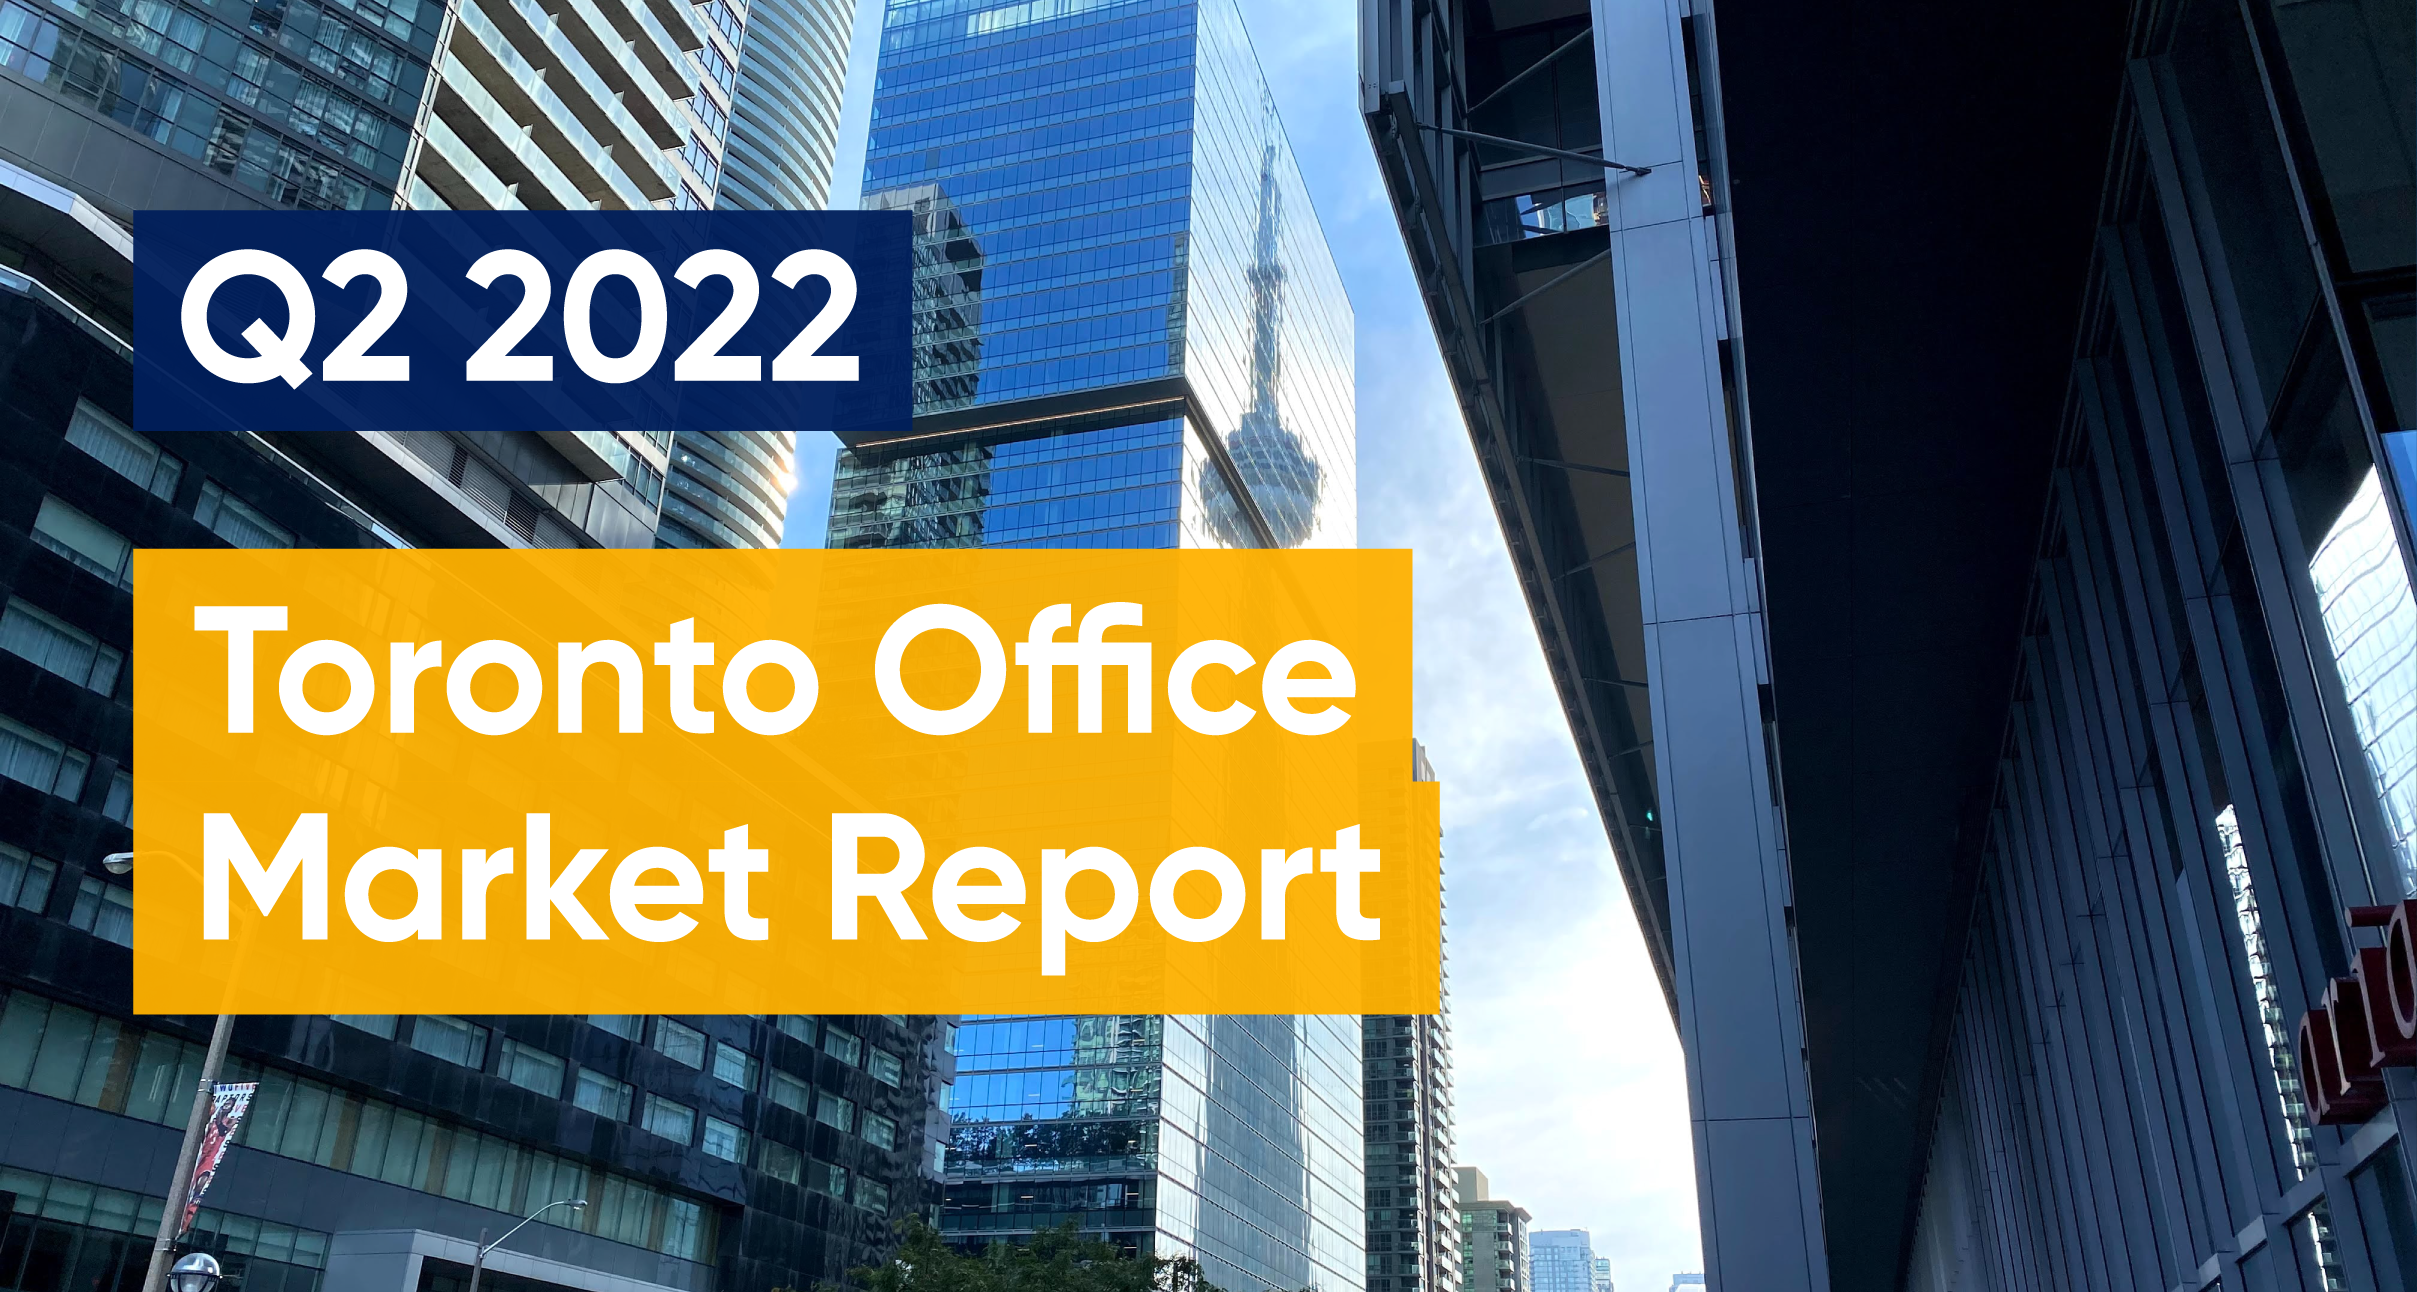 Q2 2022 Toronto Office Market Report